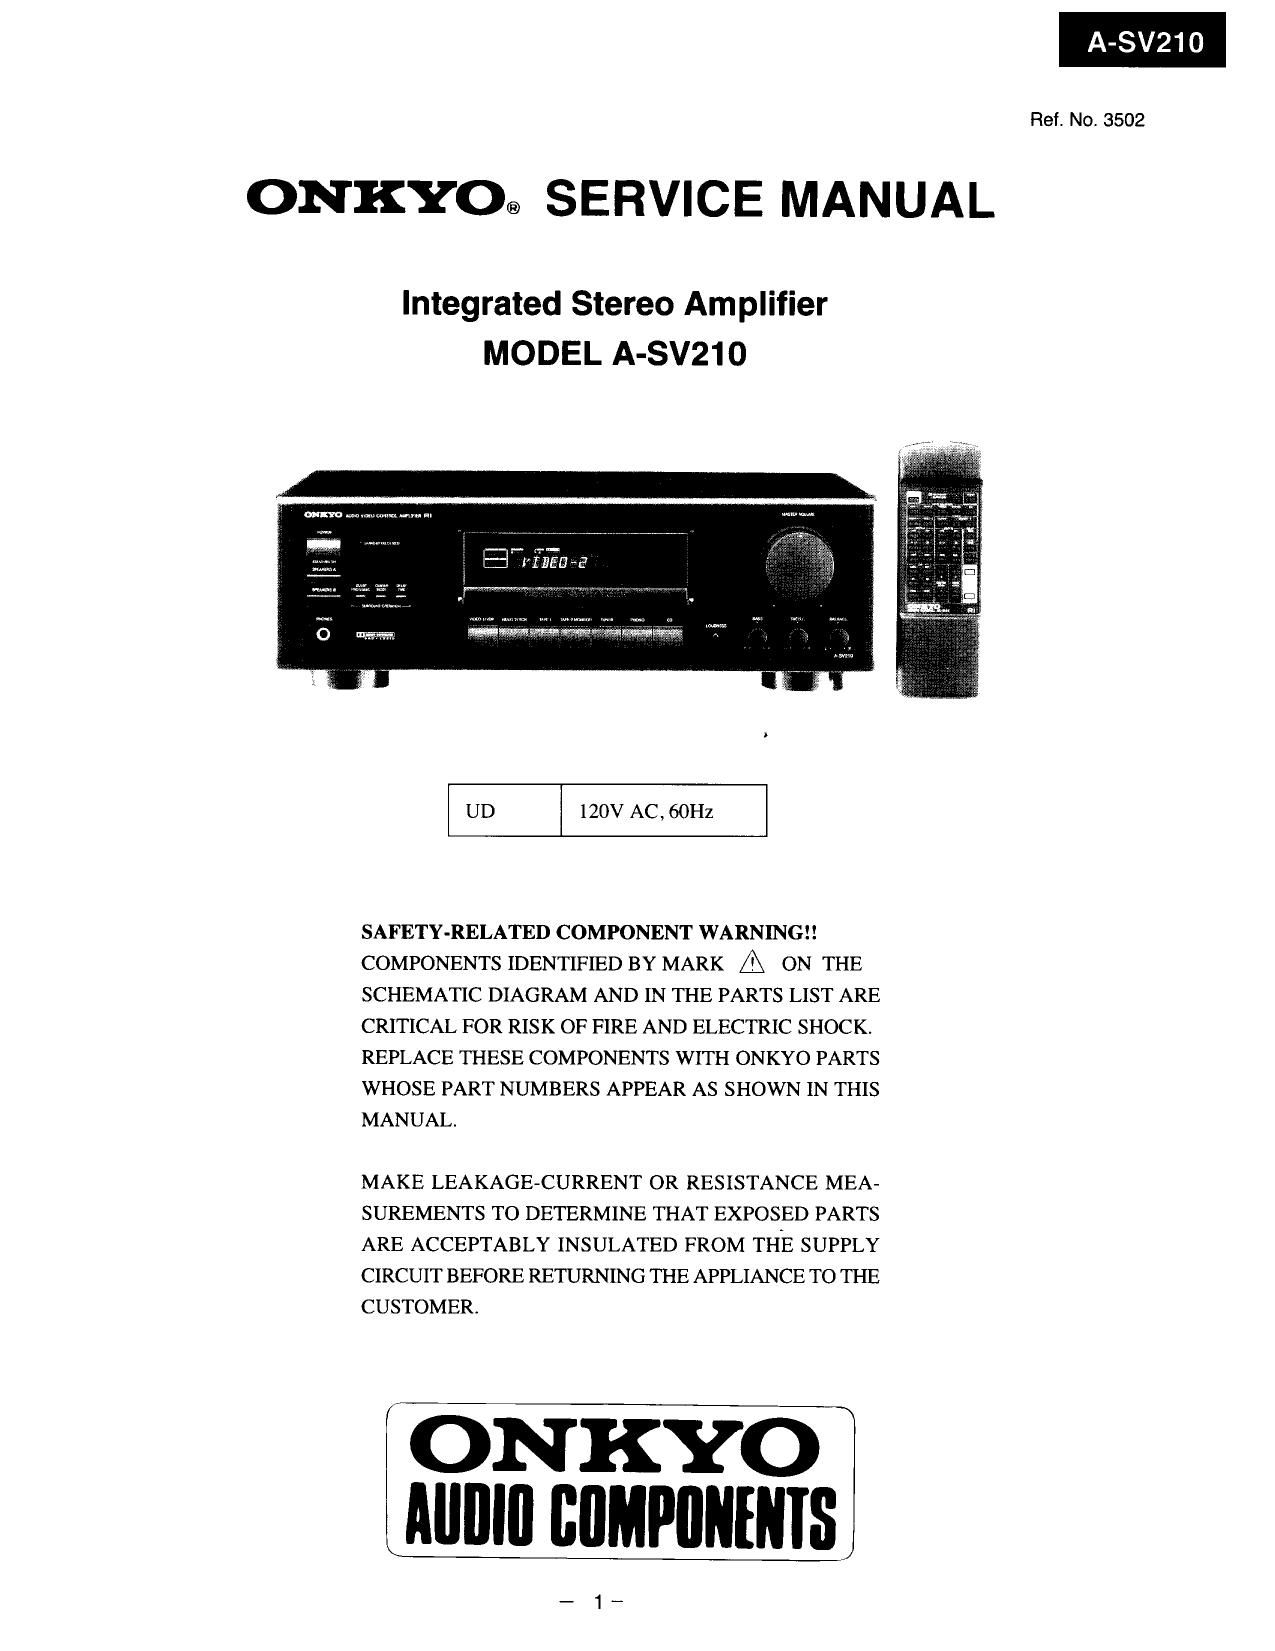 Onkyo ASV 210 Service Manual